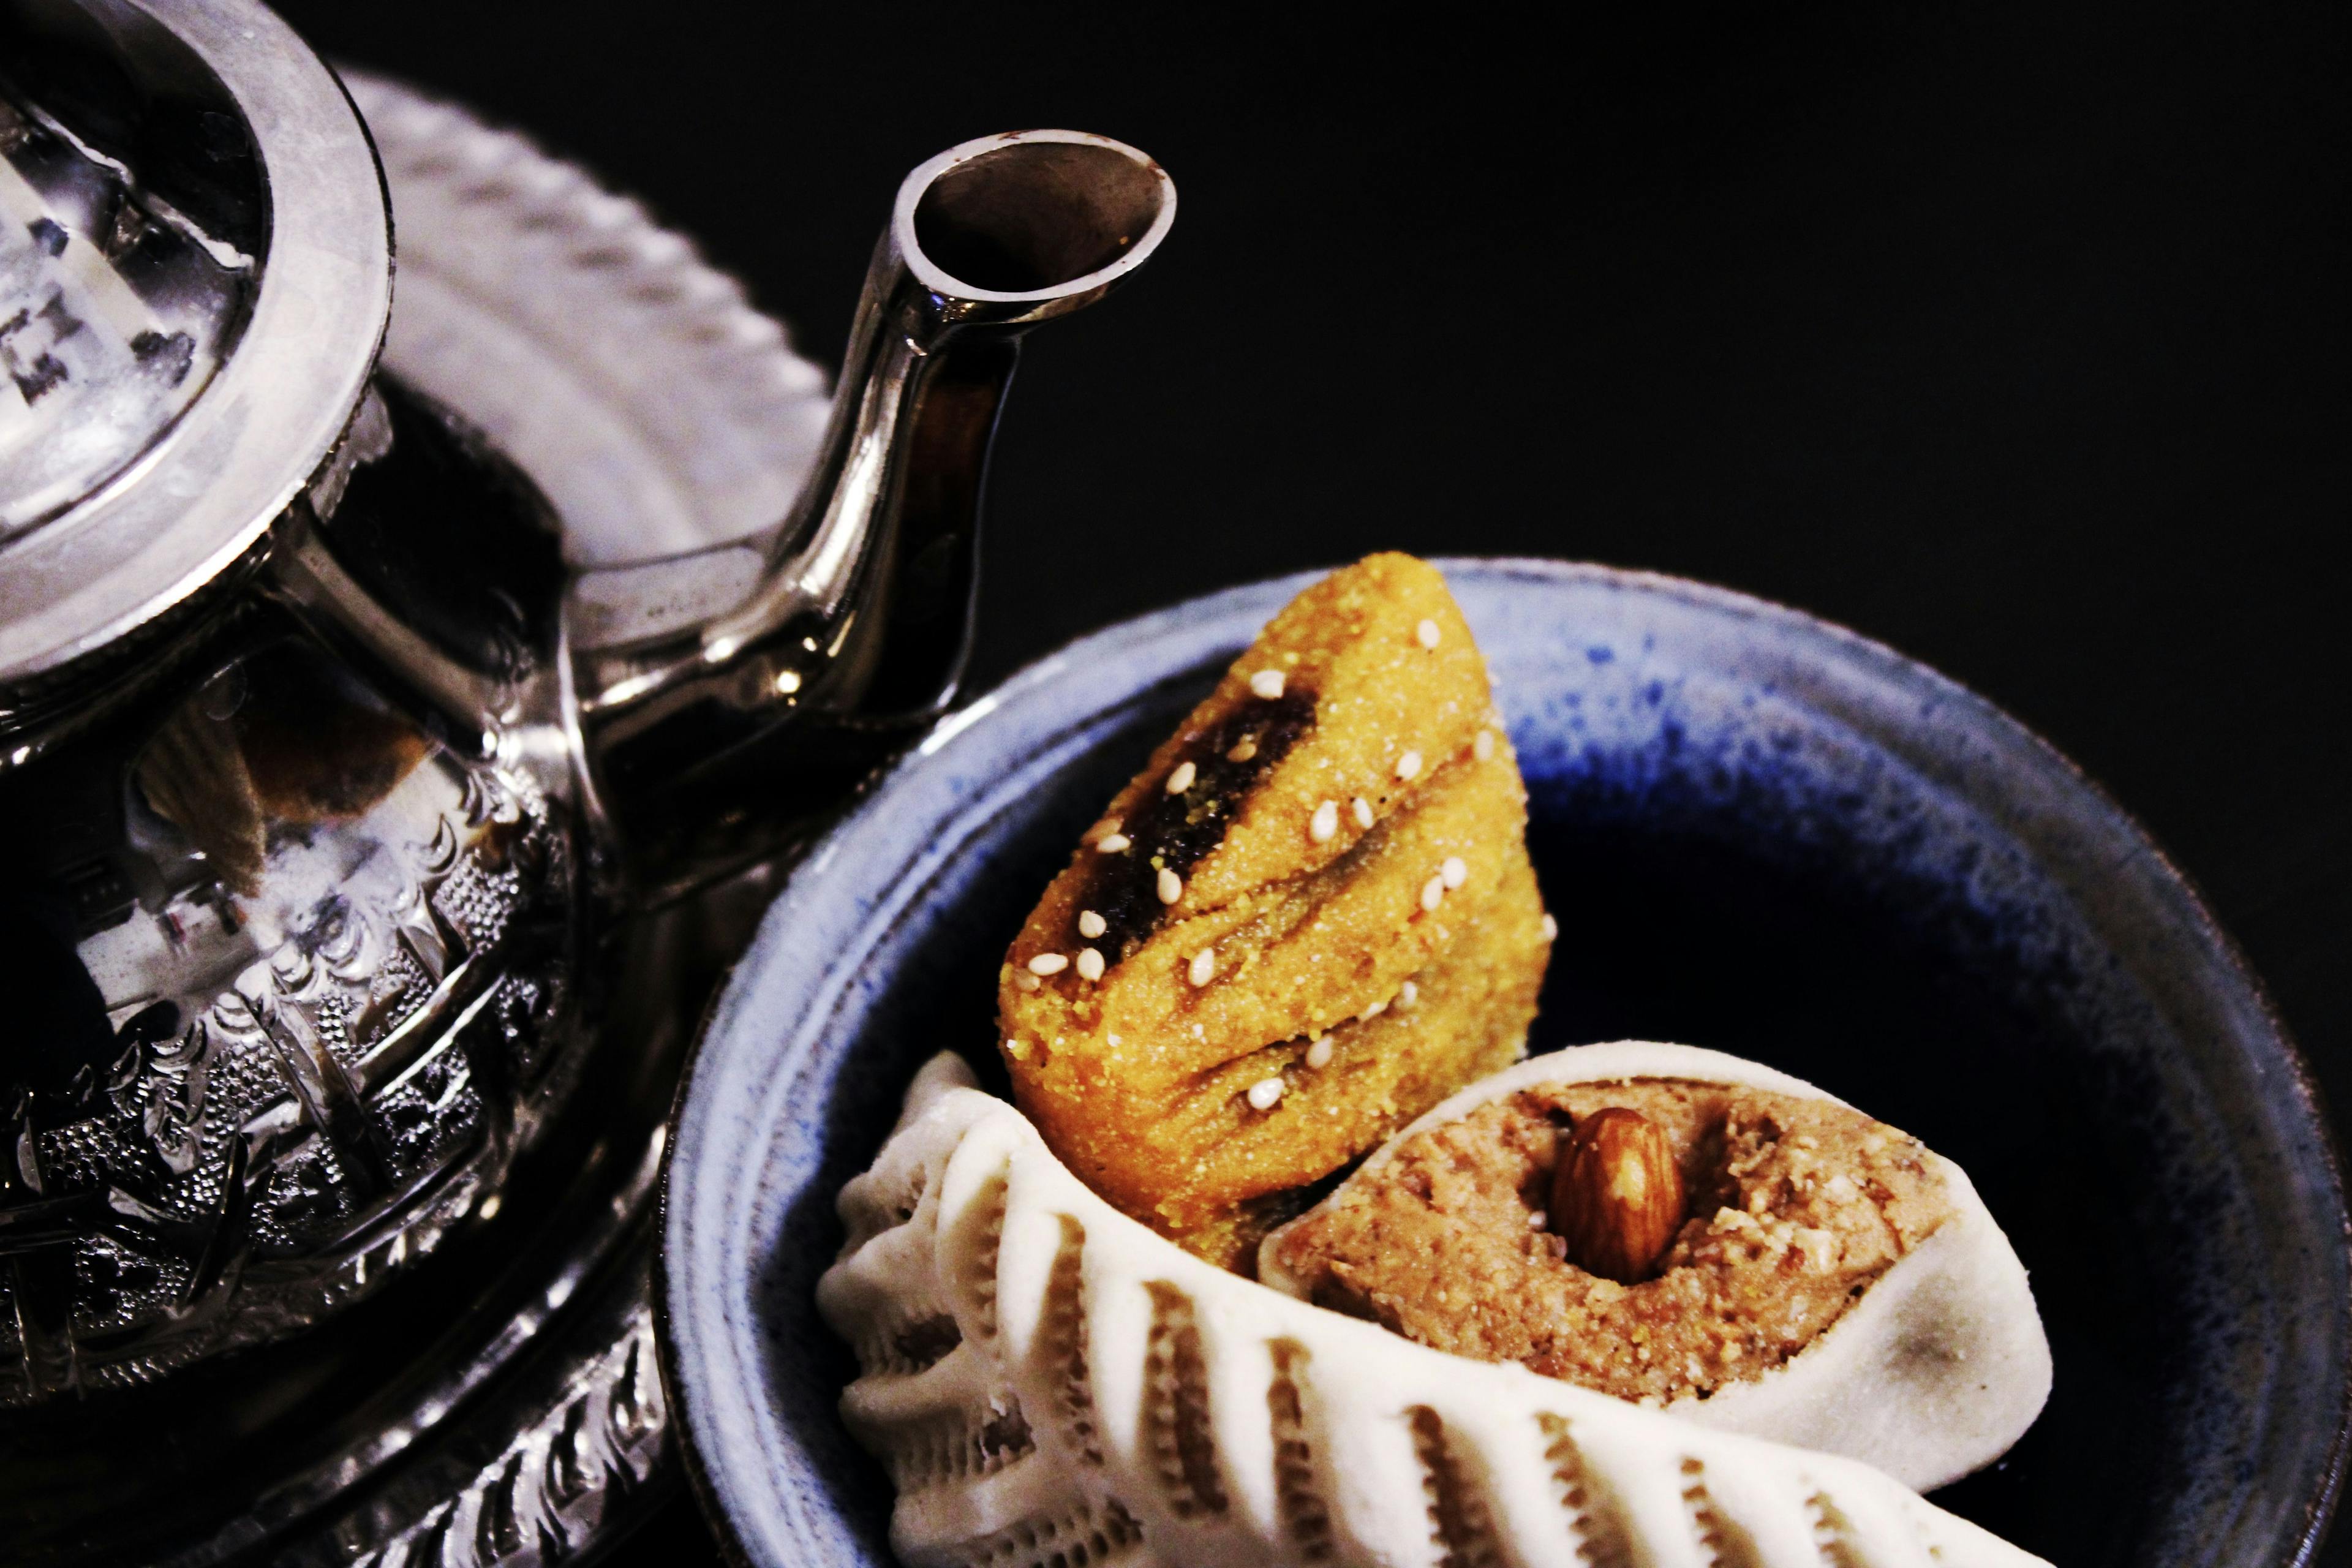 Moroccan cookies and tea.